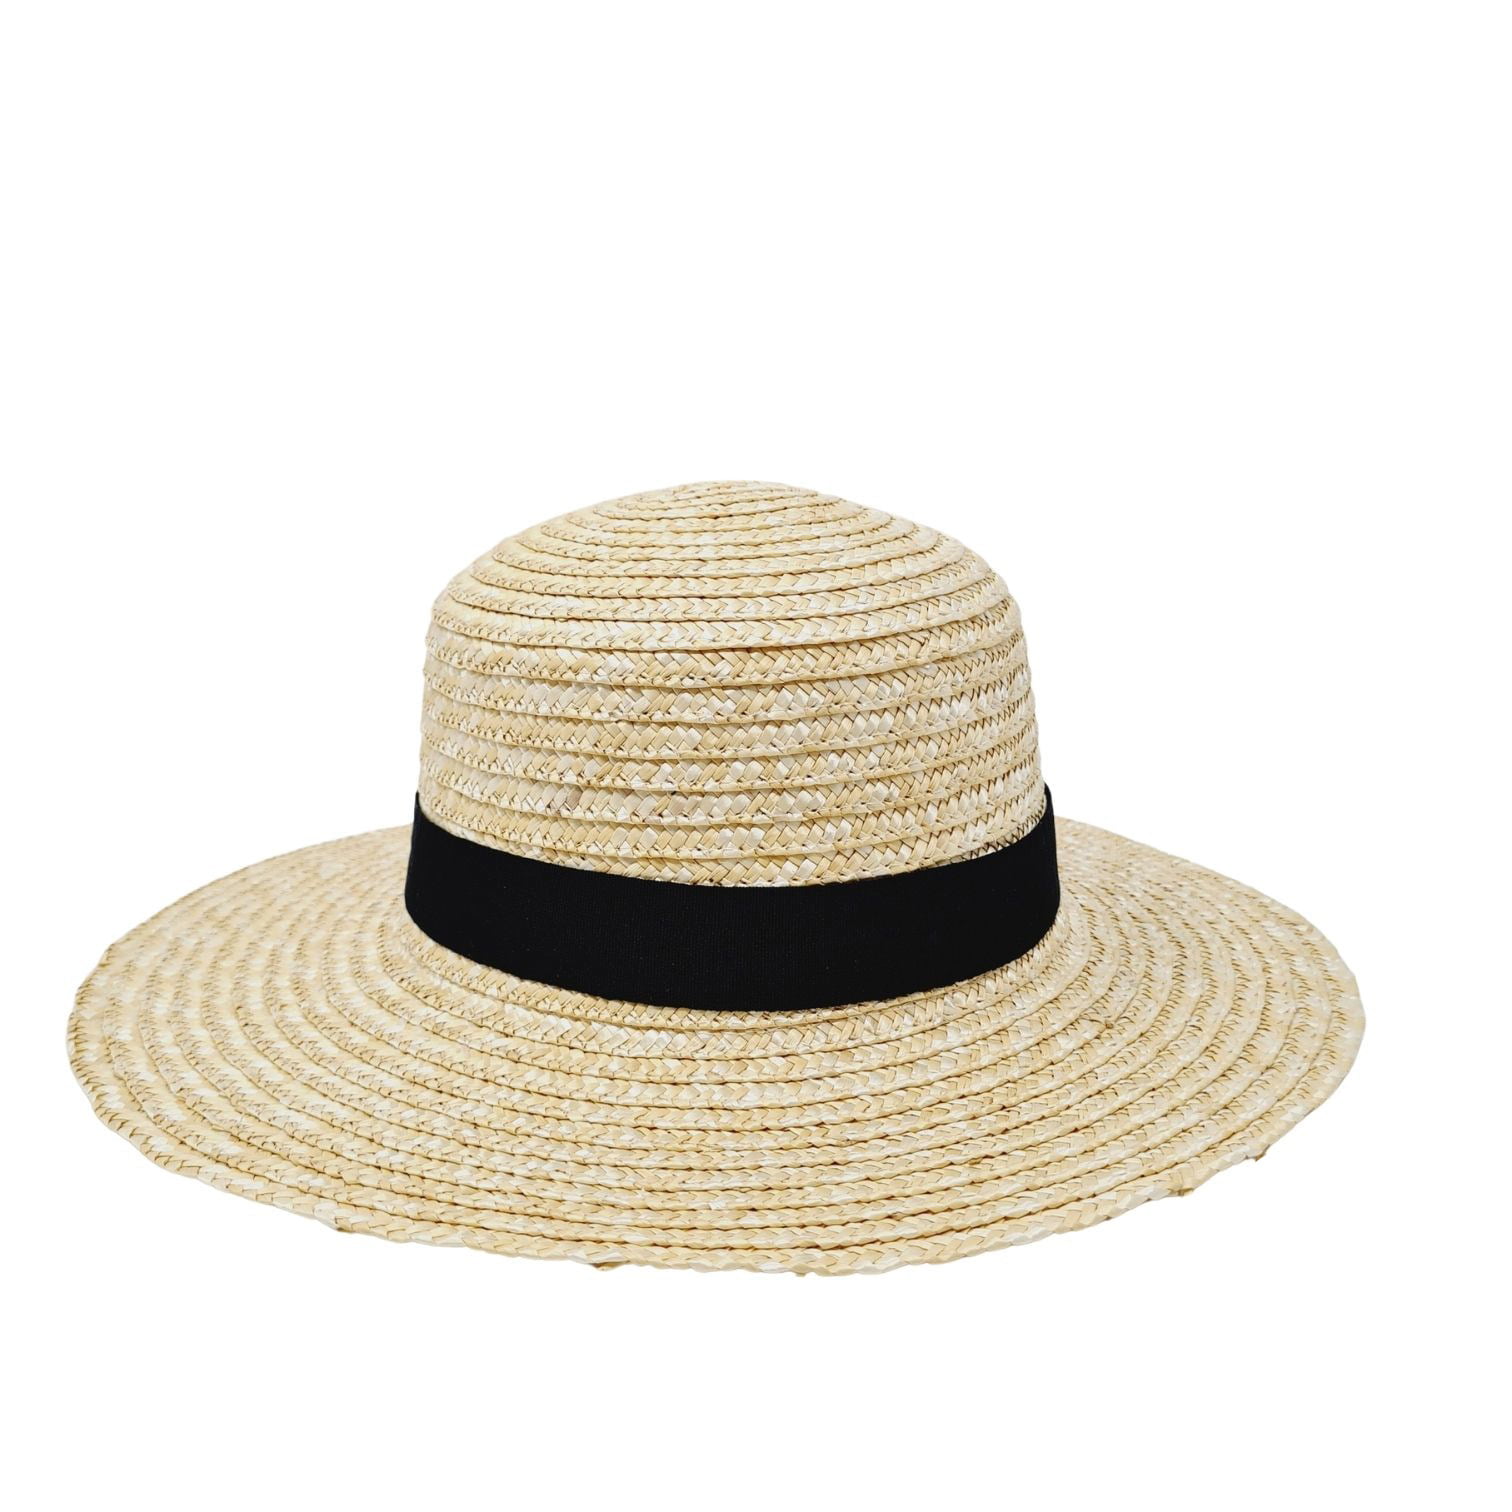 Straw Caps Personality Lady Boater Sun Hats Ribbon Round Flat Top Beach Hat Panama Style Summer Snapback Straw Hat 